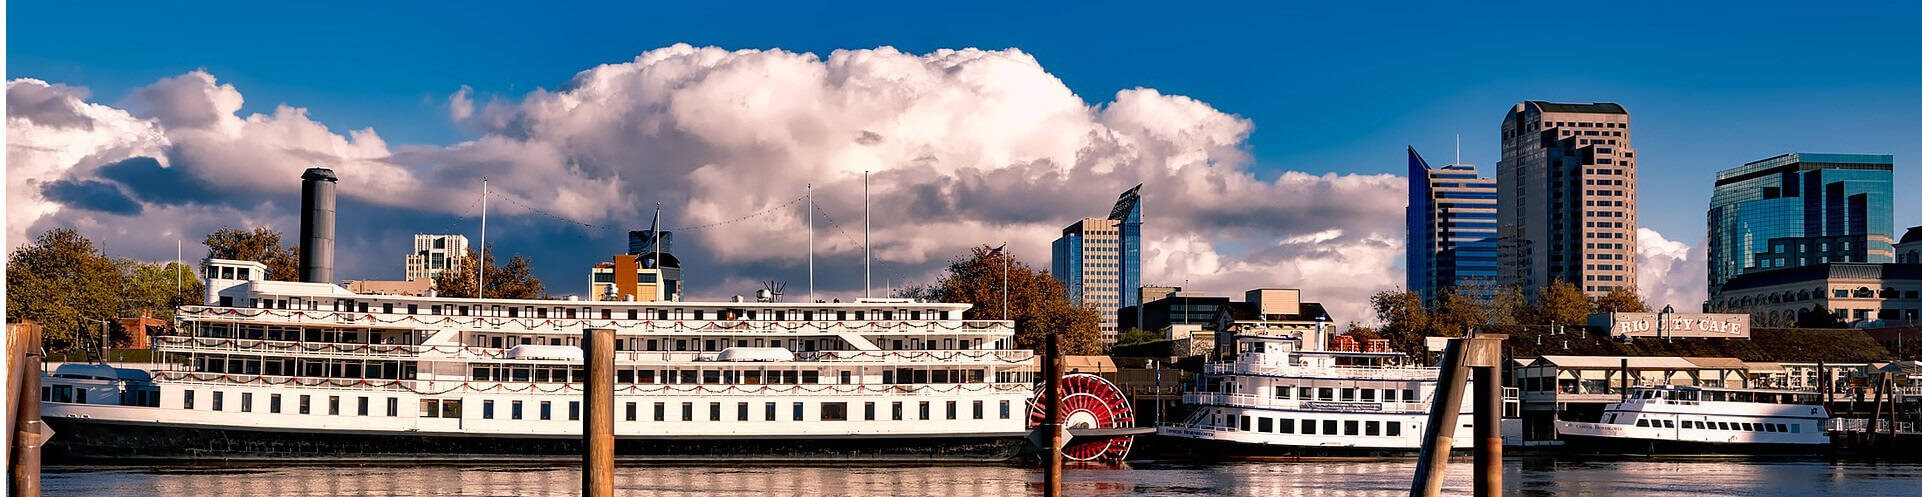 Sacramentodelta King Riverboat - Sacramento Delta King Riverboat Wallpaper